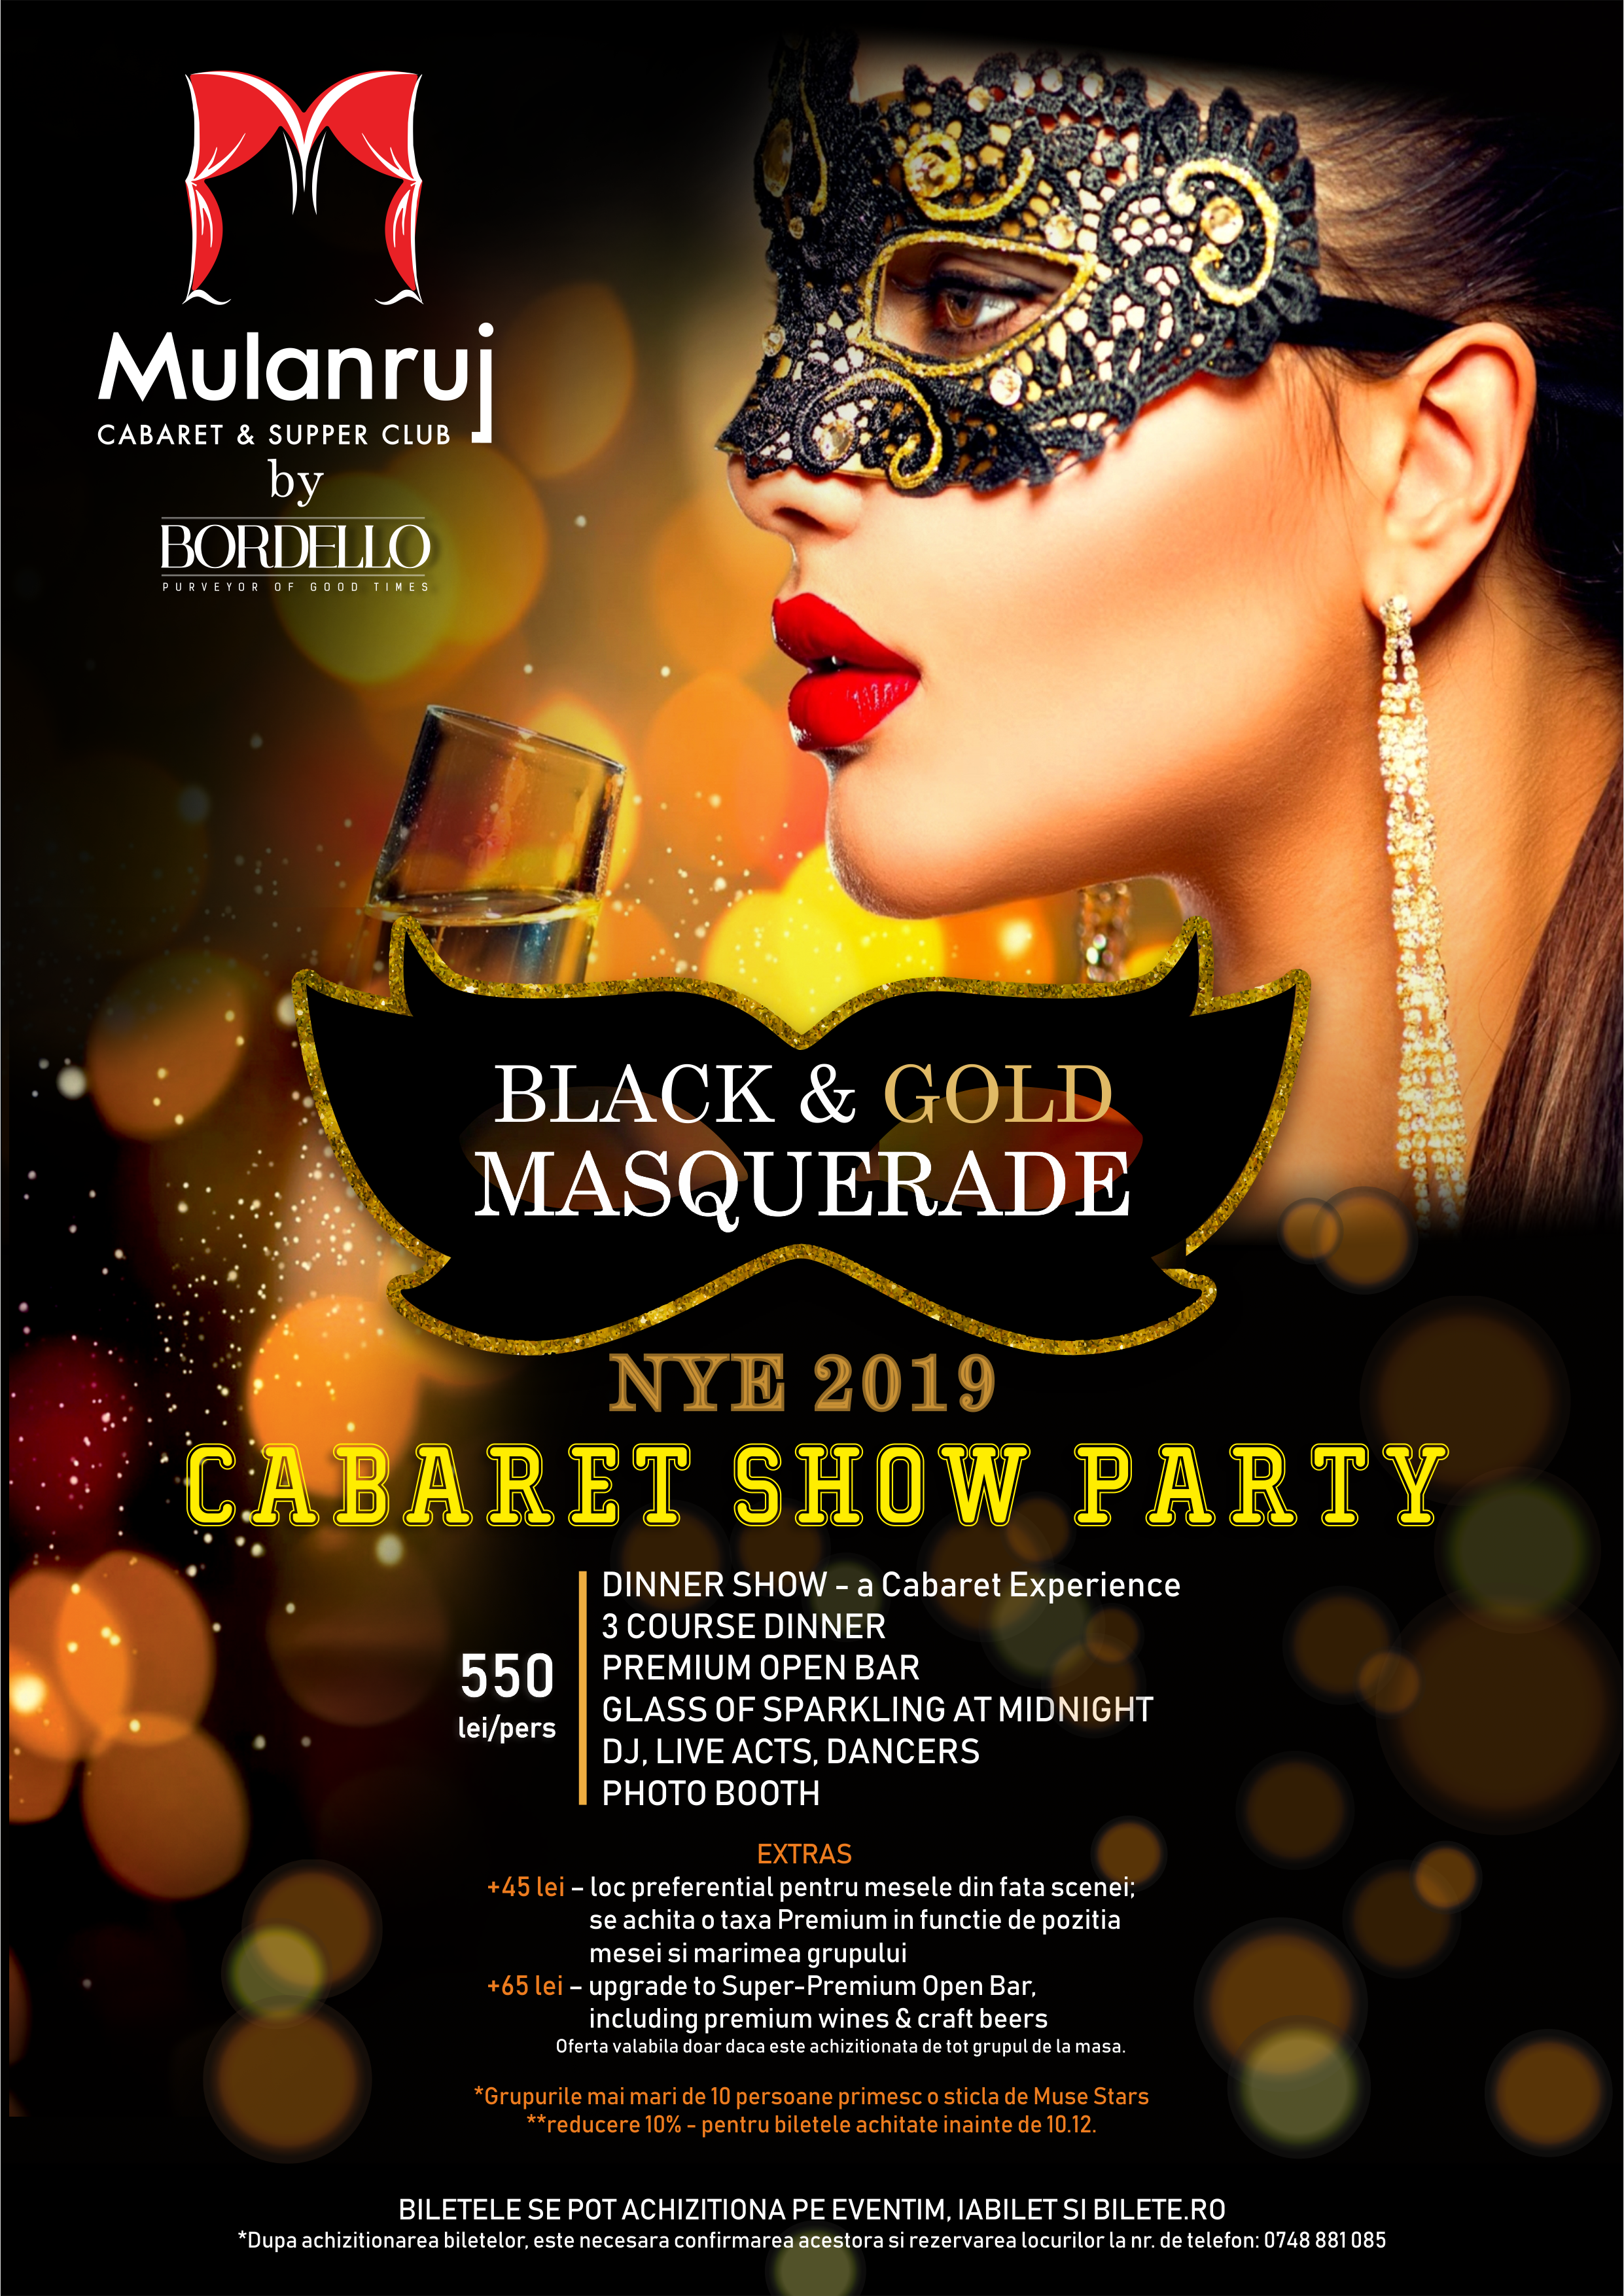 Black & Gold Masquerade – NYE 2019 Cabaret Show Party